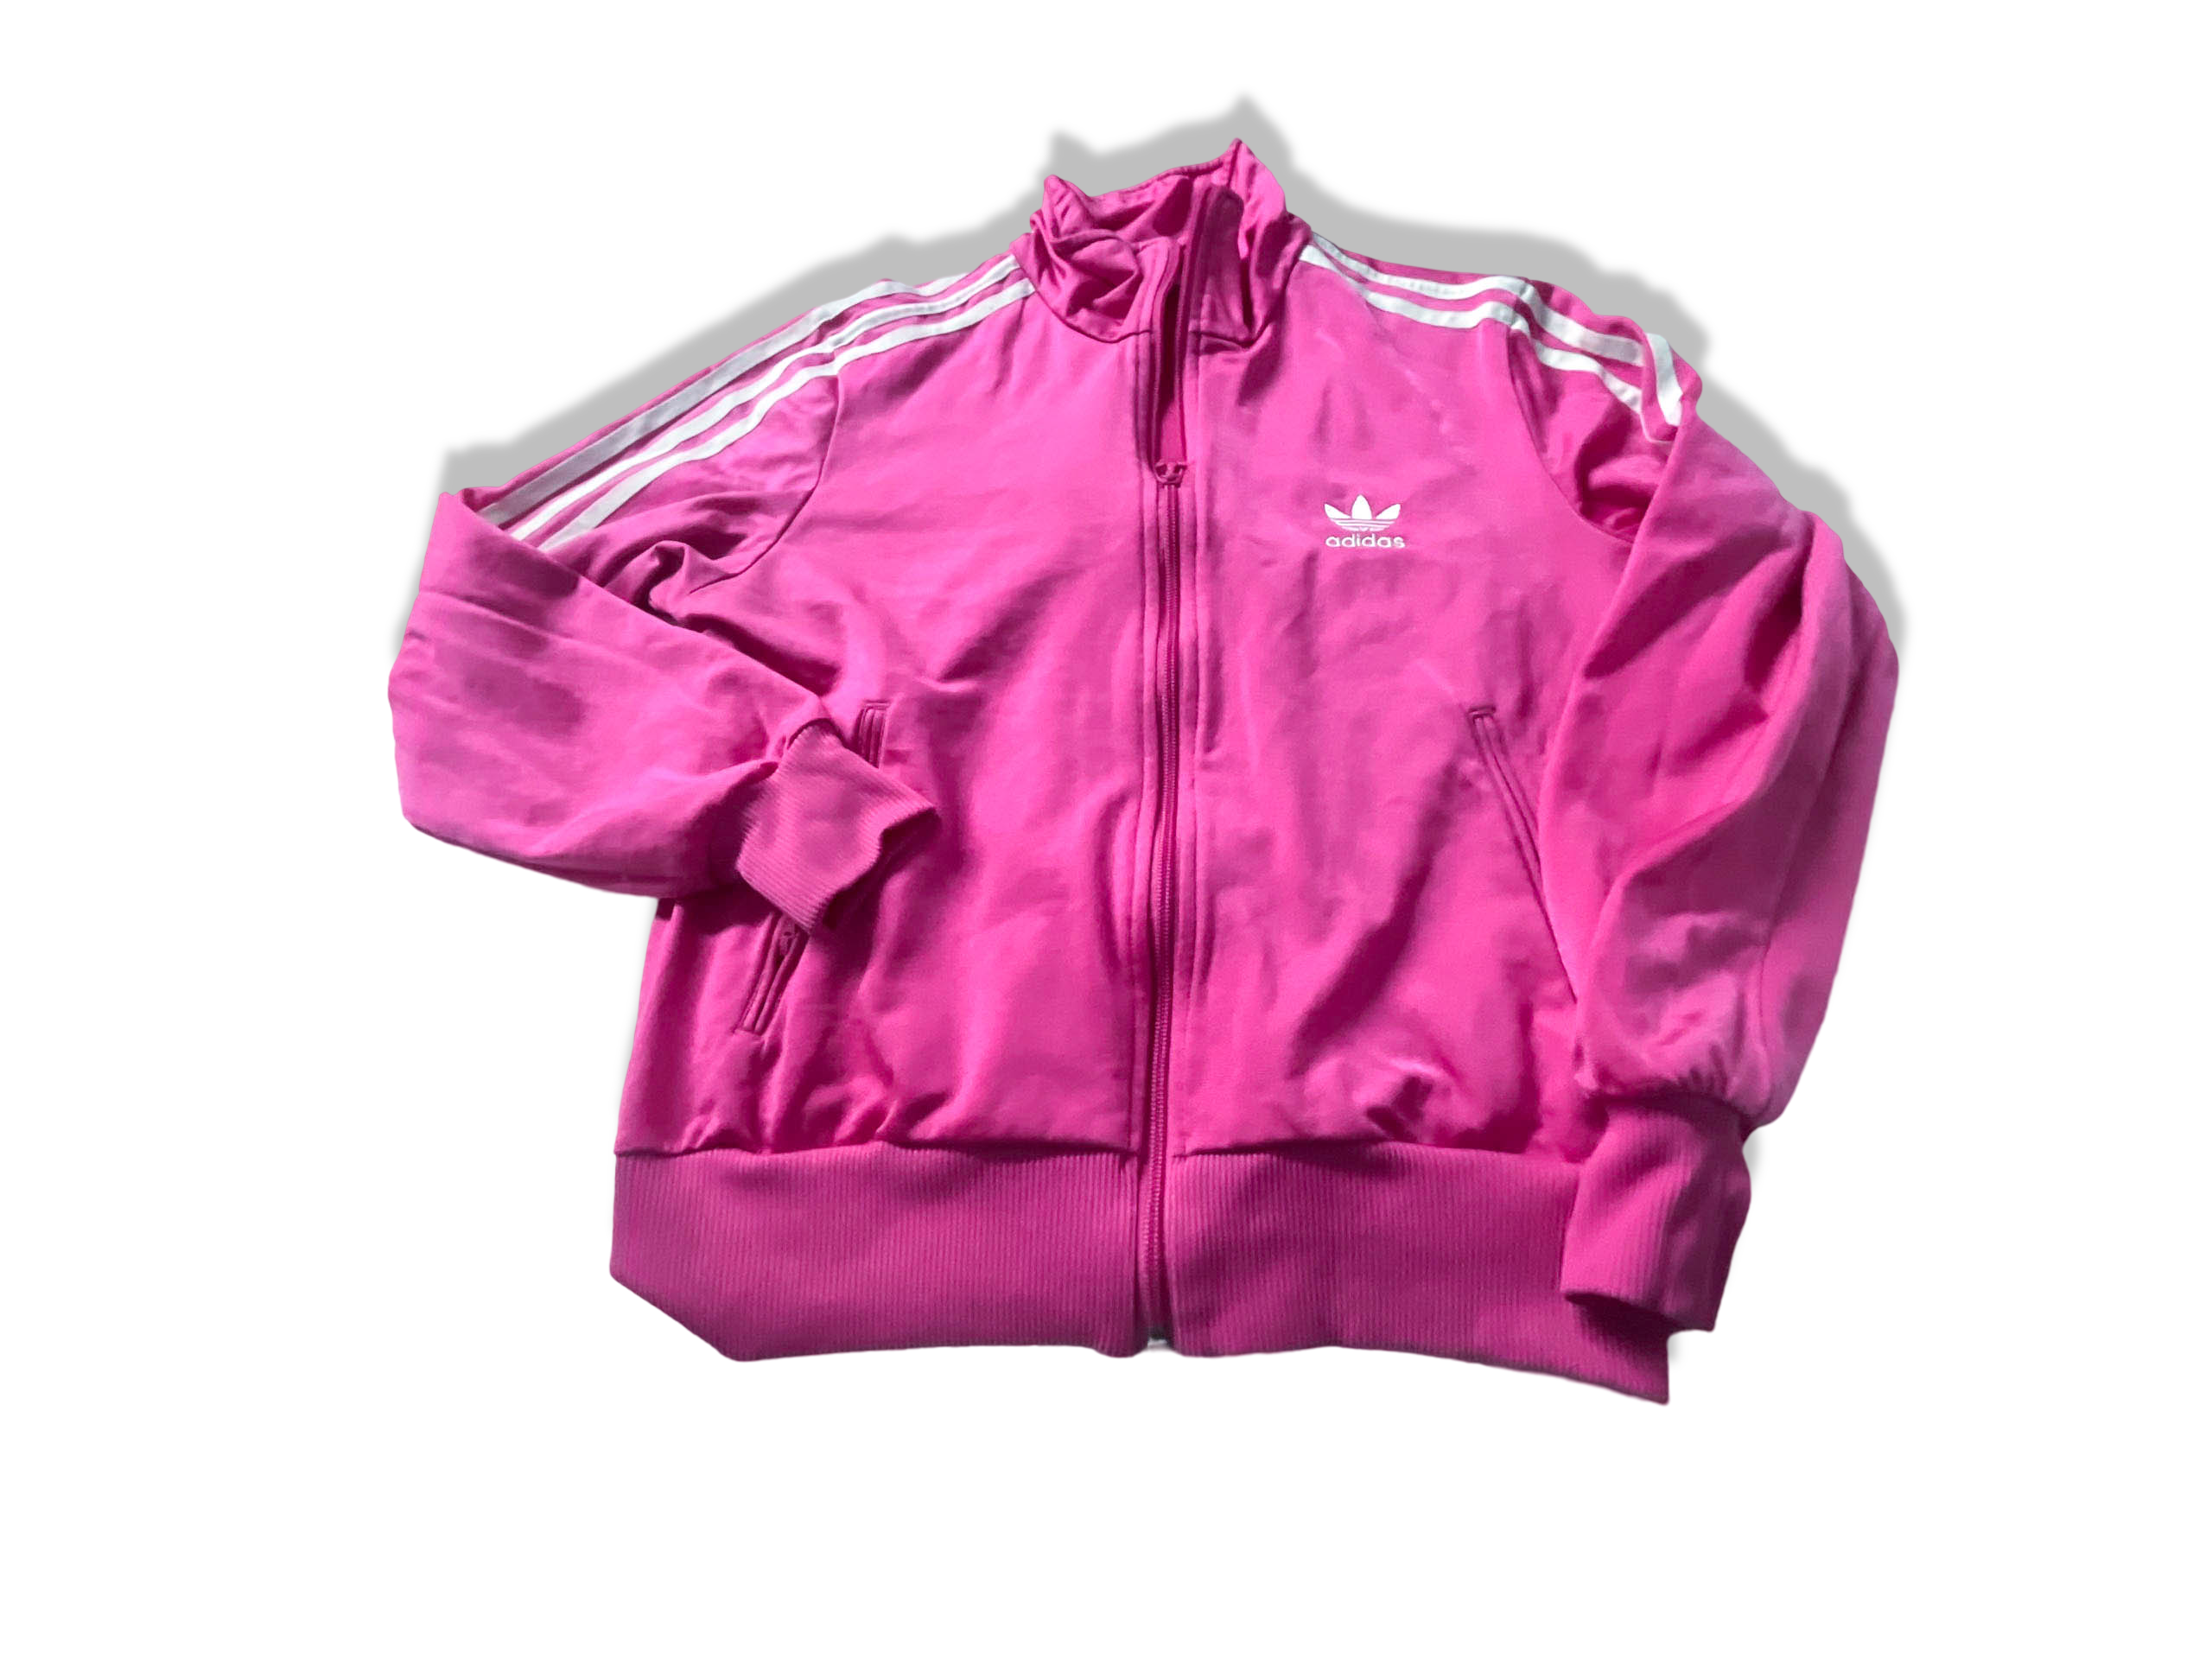 Vintage Adidas women's pink 3-stripe full zip track top in S|L26 W19|SKU 3946